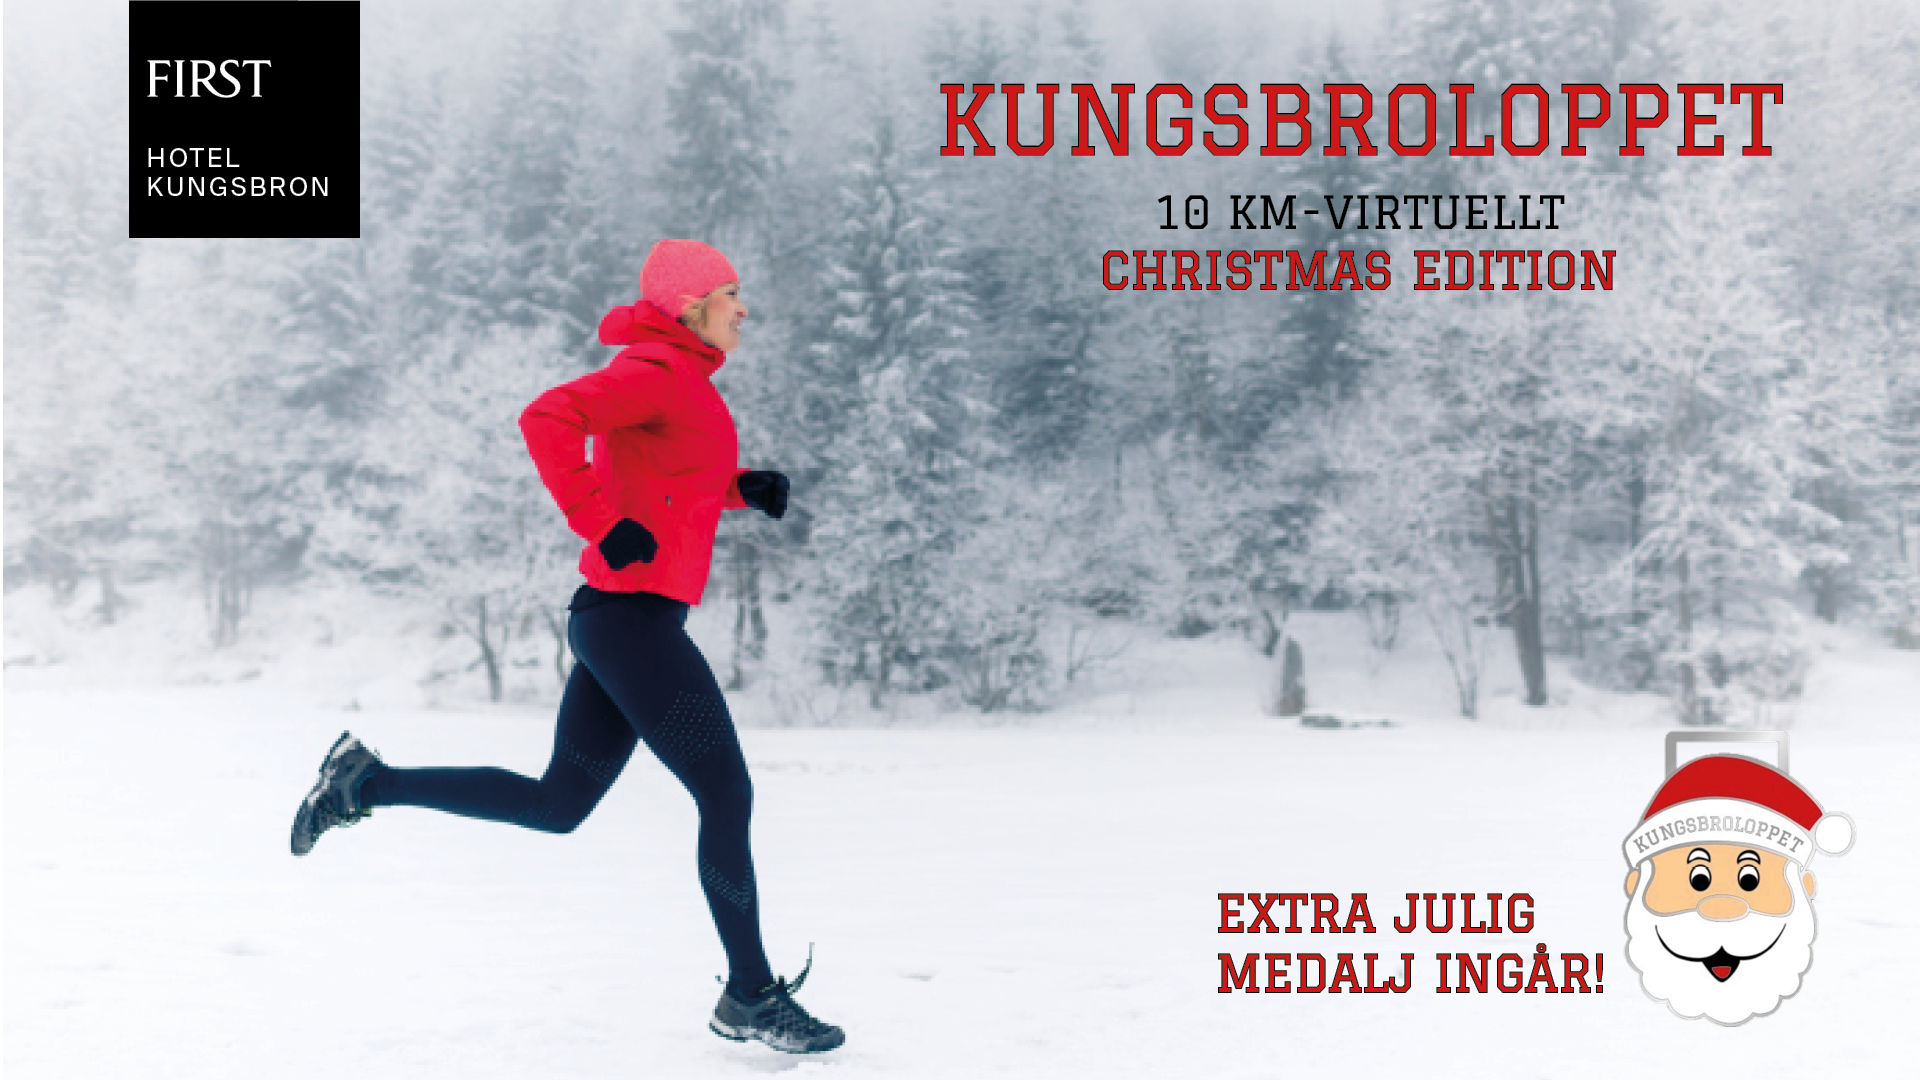 Kungsbroloppet December - Christmas Edition 10 KM